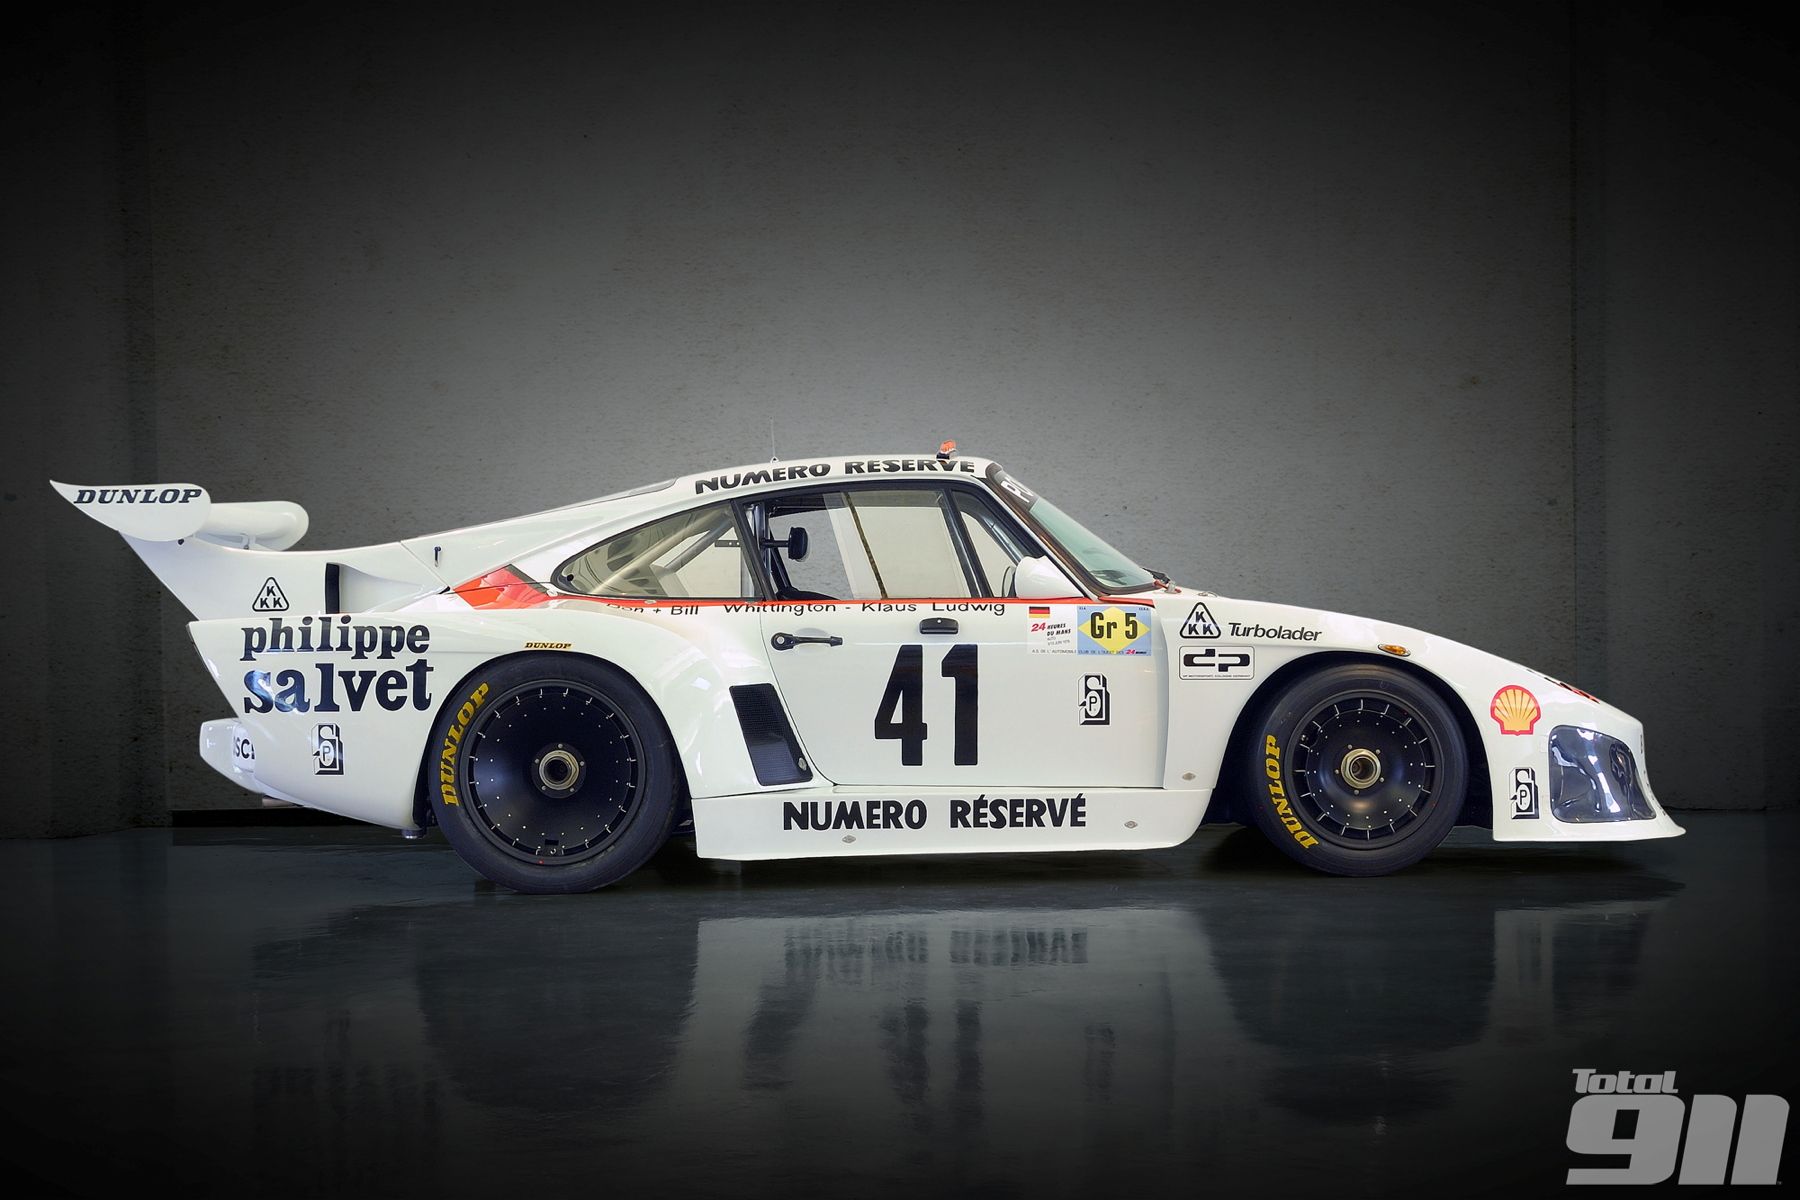 Porsche 935 K3: An icon amongst icons